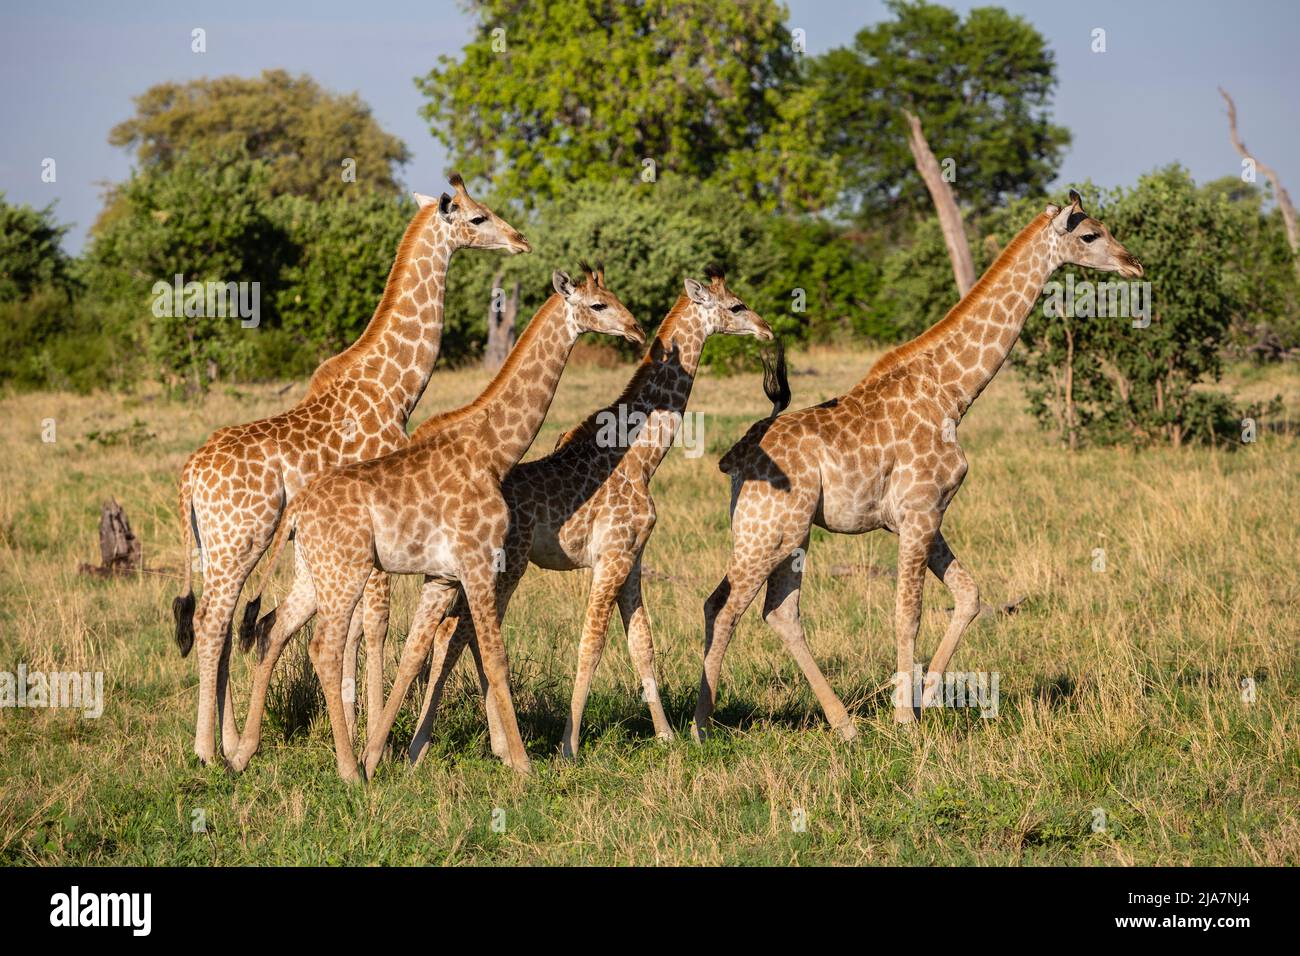 Girafe du sud de la prairie du delta de l'Okavango, Botswana Banque D'Images